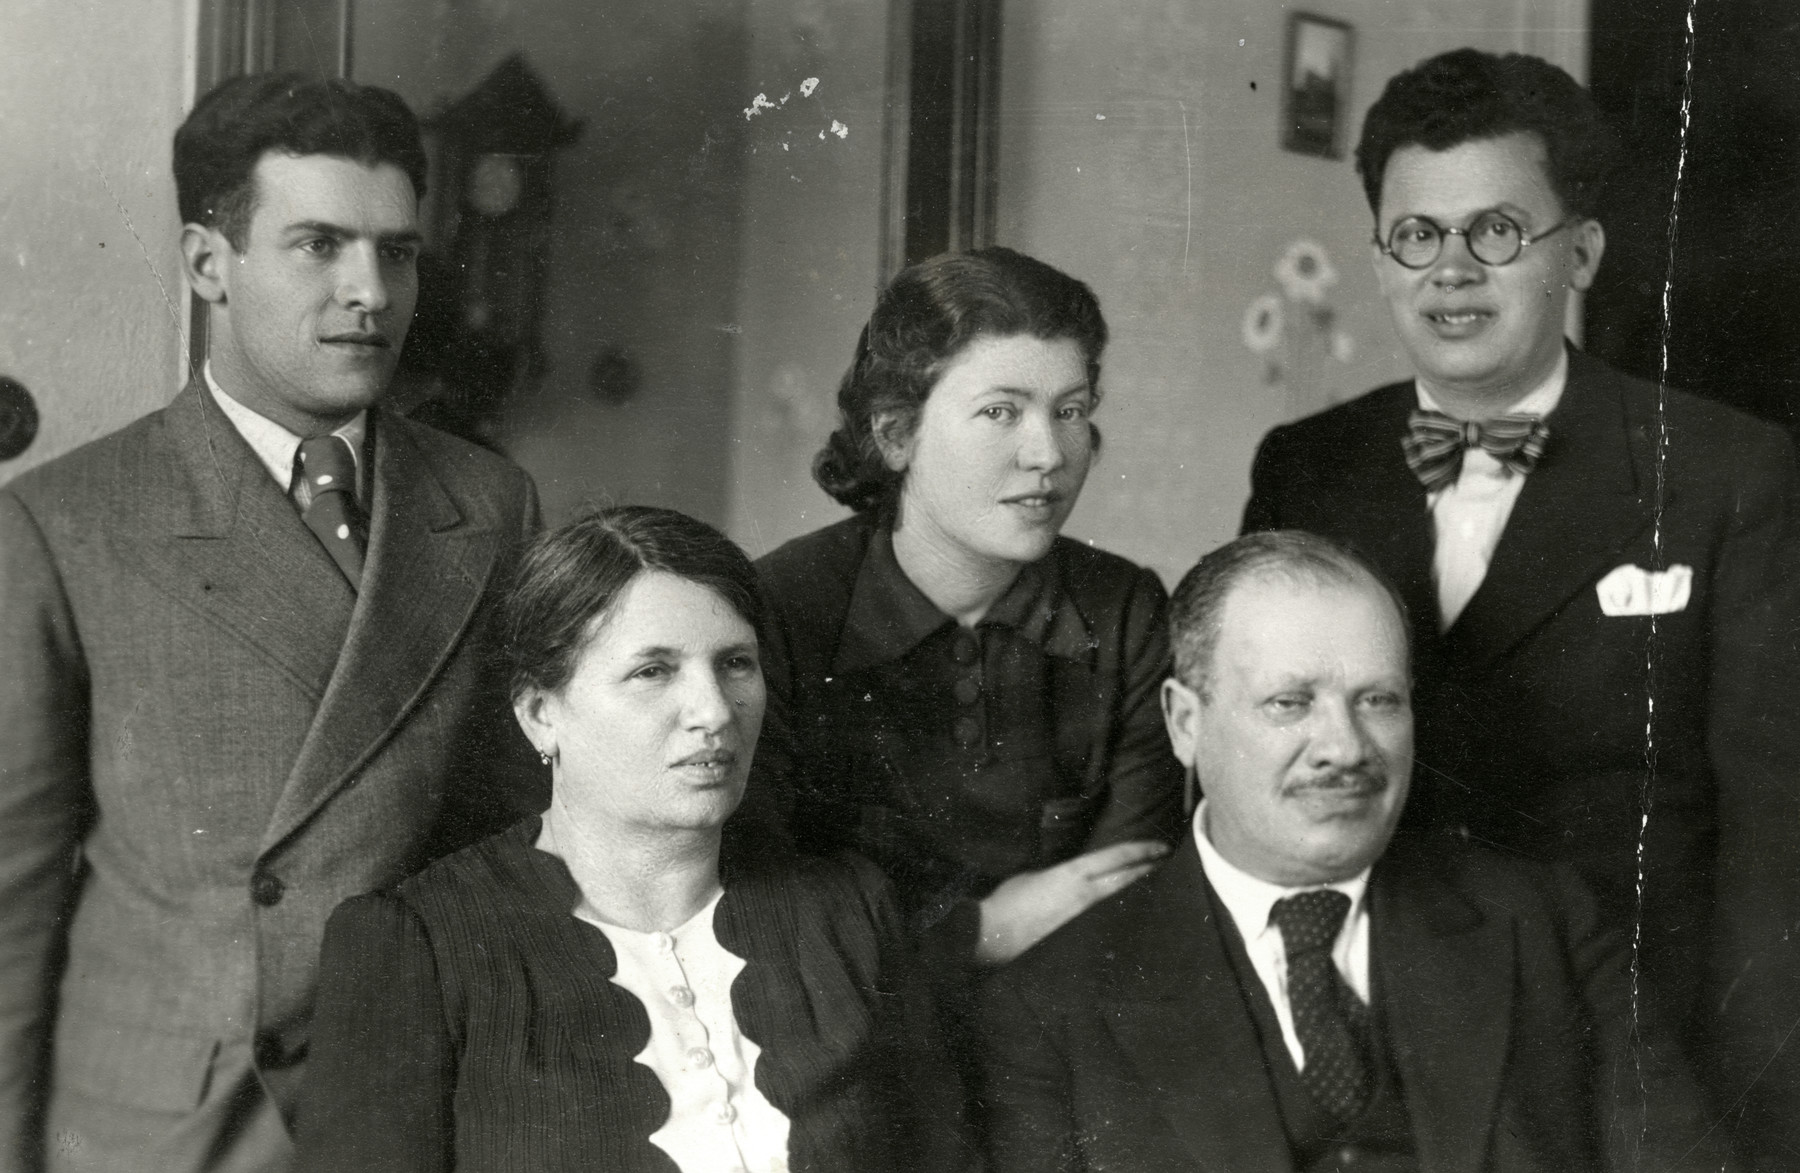 Portrait of the Hajon family prior to Mordechai's immigration to Palestine. 

Top row (left to right): Mordechai (Marko) Hajon, Tina Hajon; and Joseph (Beppo) Hajon, the donor's uncle who perished at the Jasenovac concentration camp. Bottom row (left to right): Esther and Izak Hajon, the donor's grandparents.